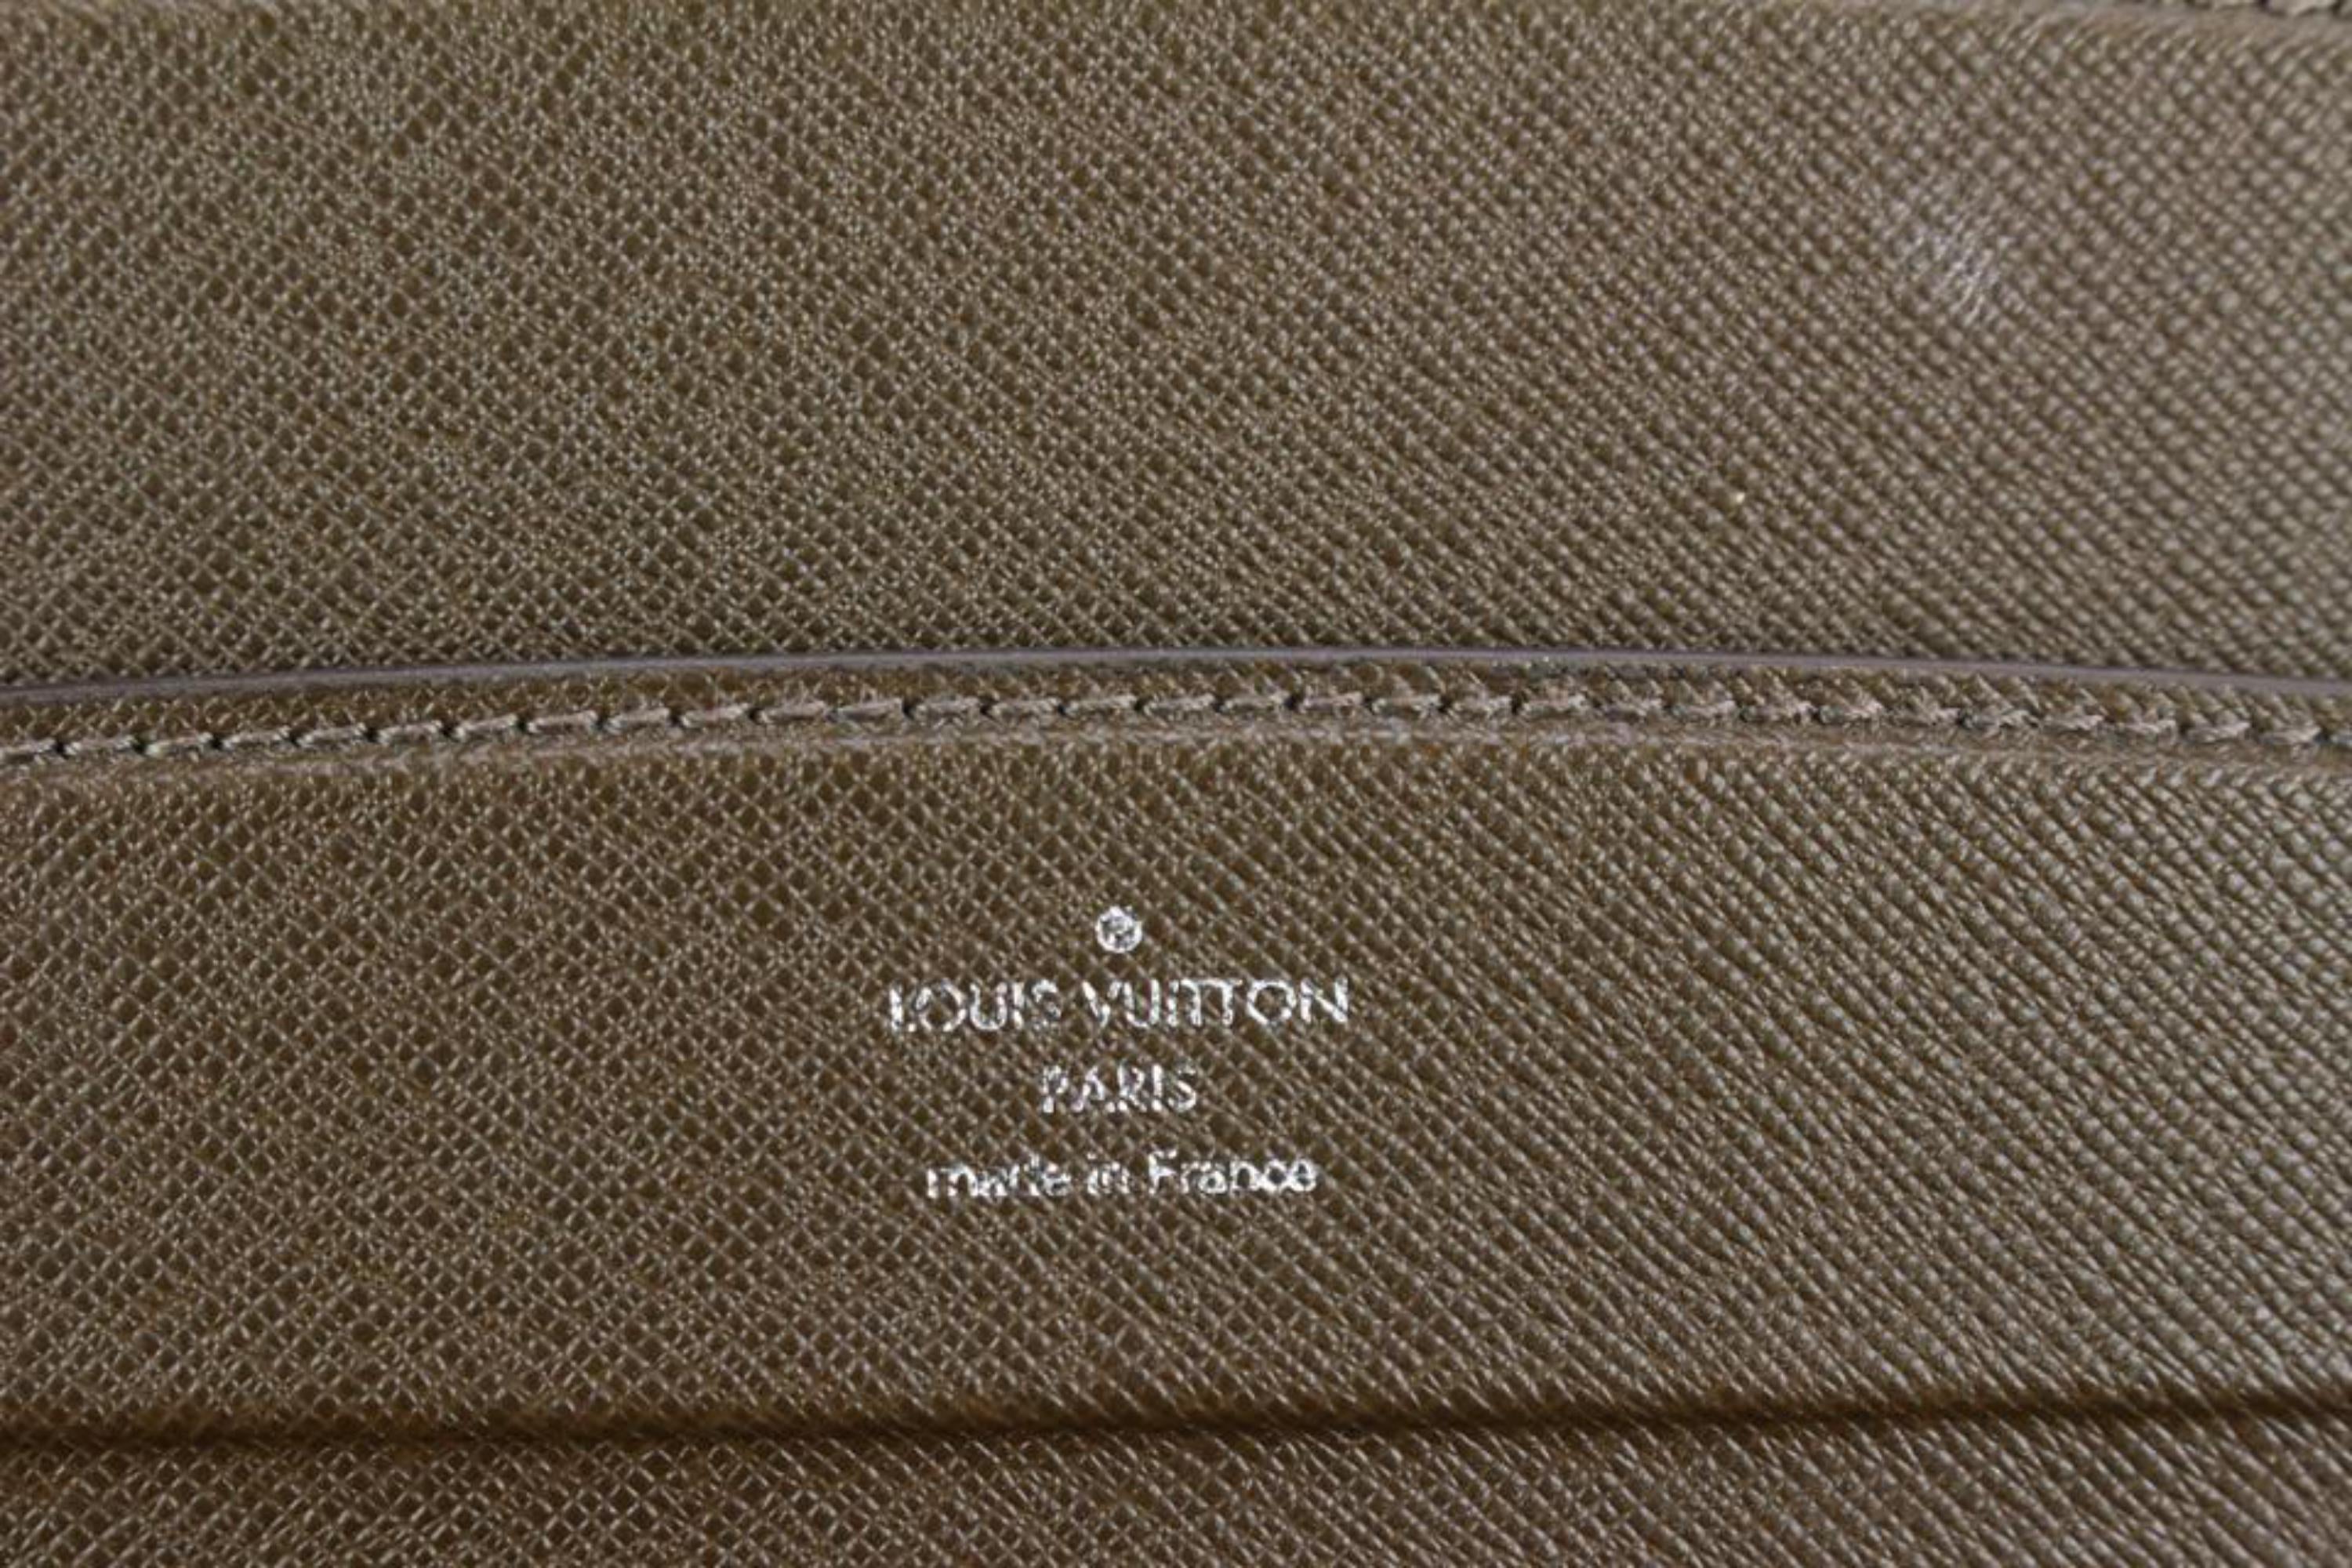 Louis Vuitton LV Taiga Maroon Leather President Classeur Attache Briefcase  Bag